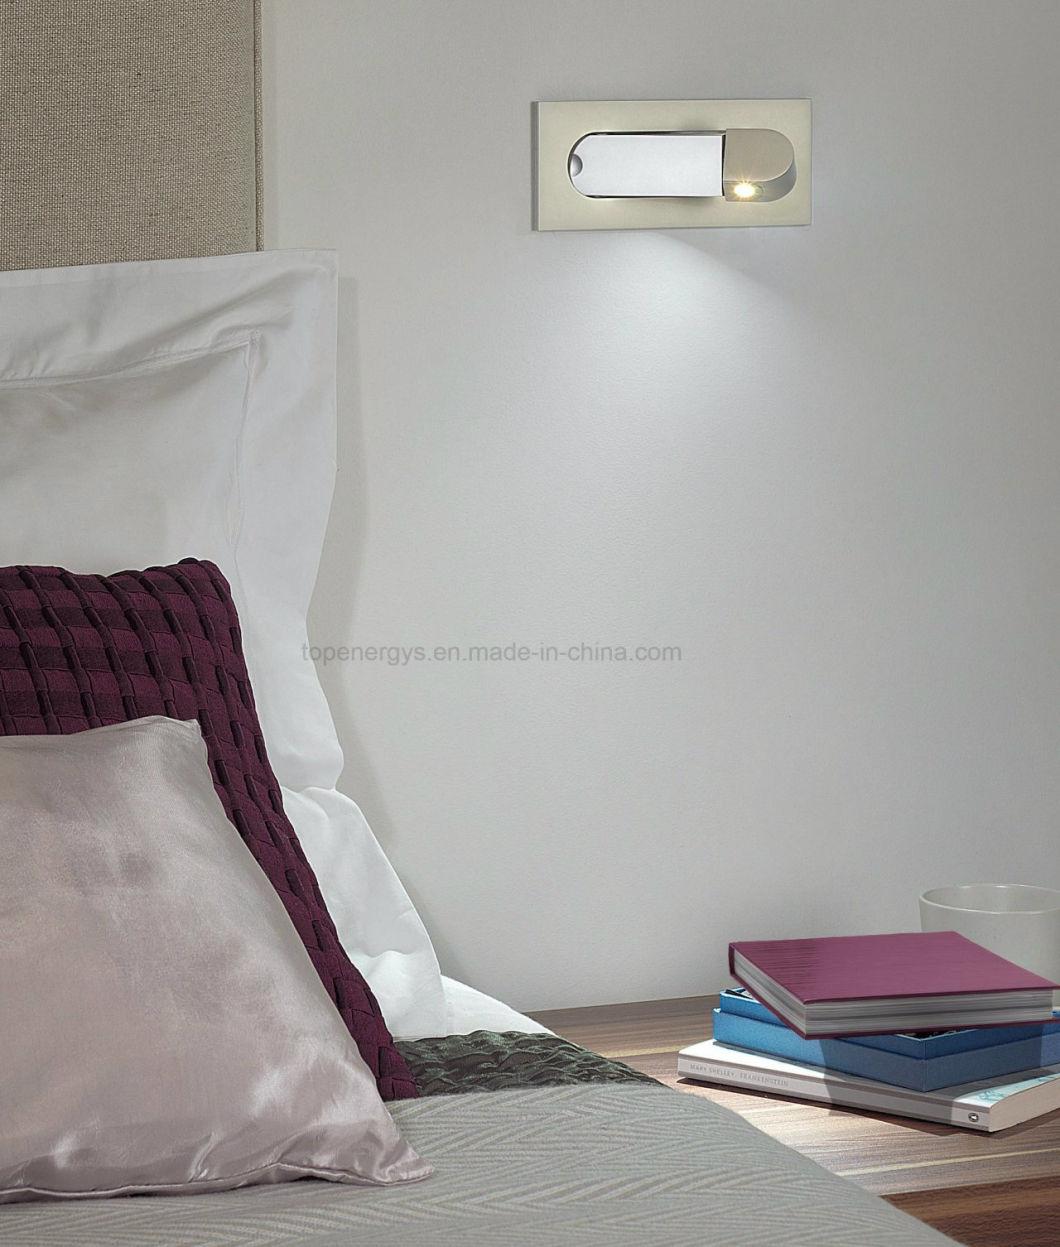 Rotatable LED Wall Lamp Bh-004 Decorative Adjustable Headboard Light Hotel Bedside Reading Light